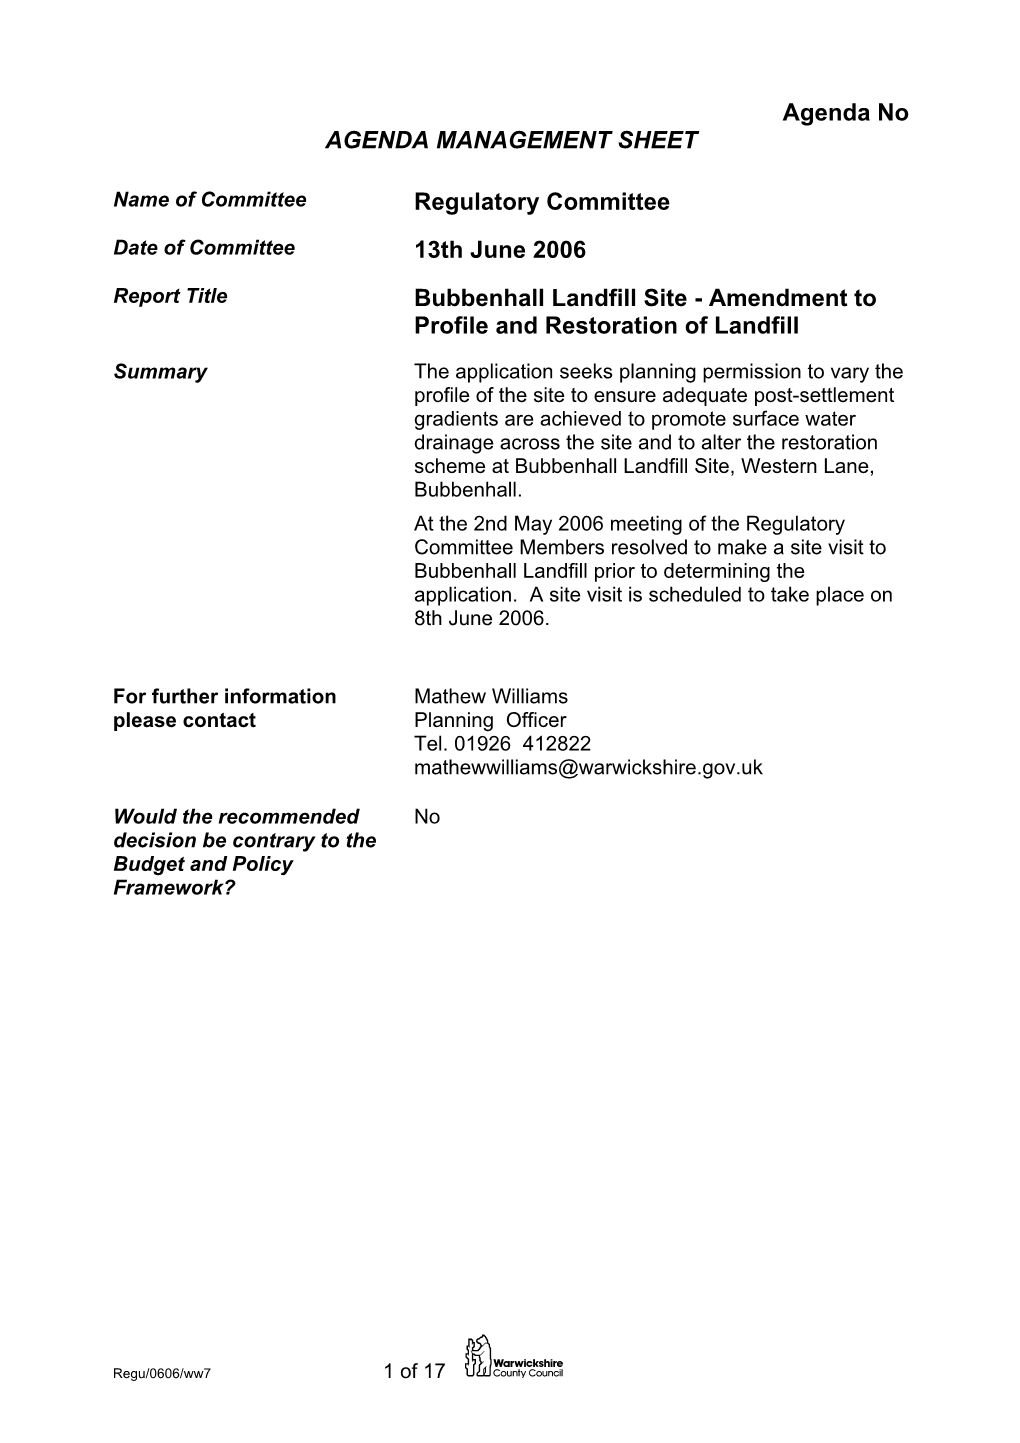 Bubbenhall Landfill Site - Amendment to Profile and Restoration of Landfill